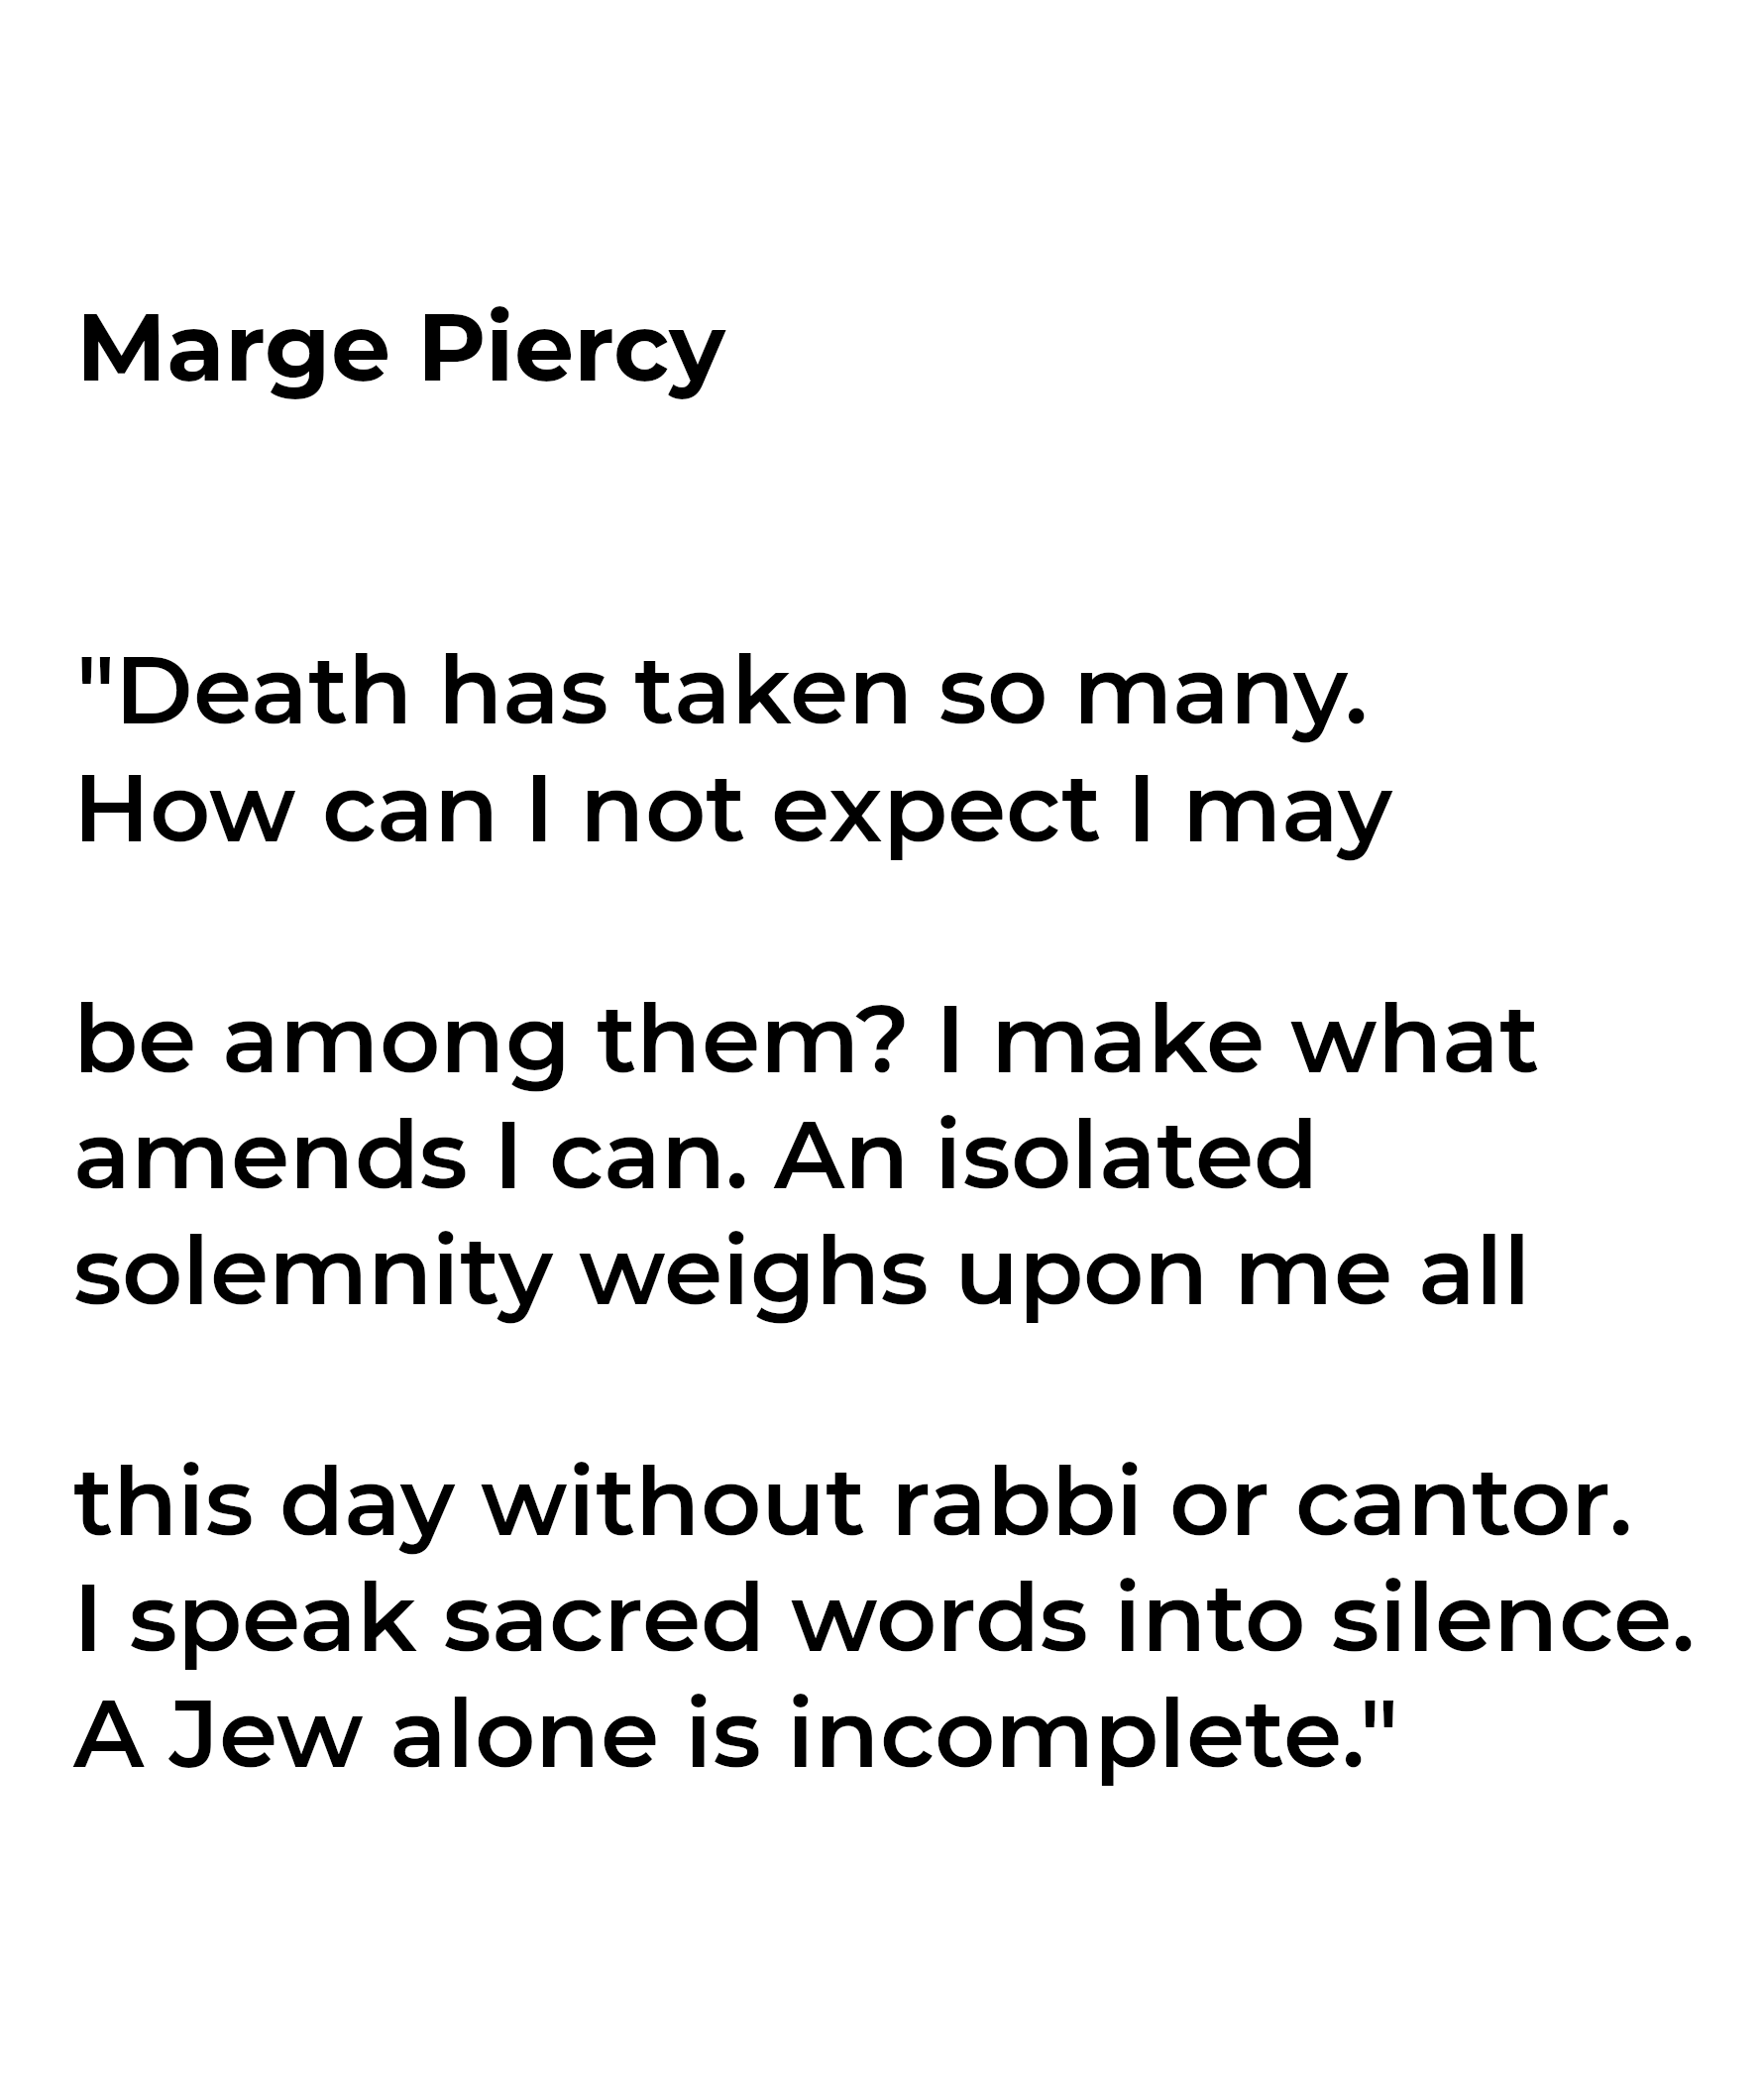 Marge Piercy's Poem